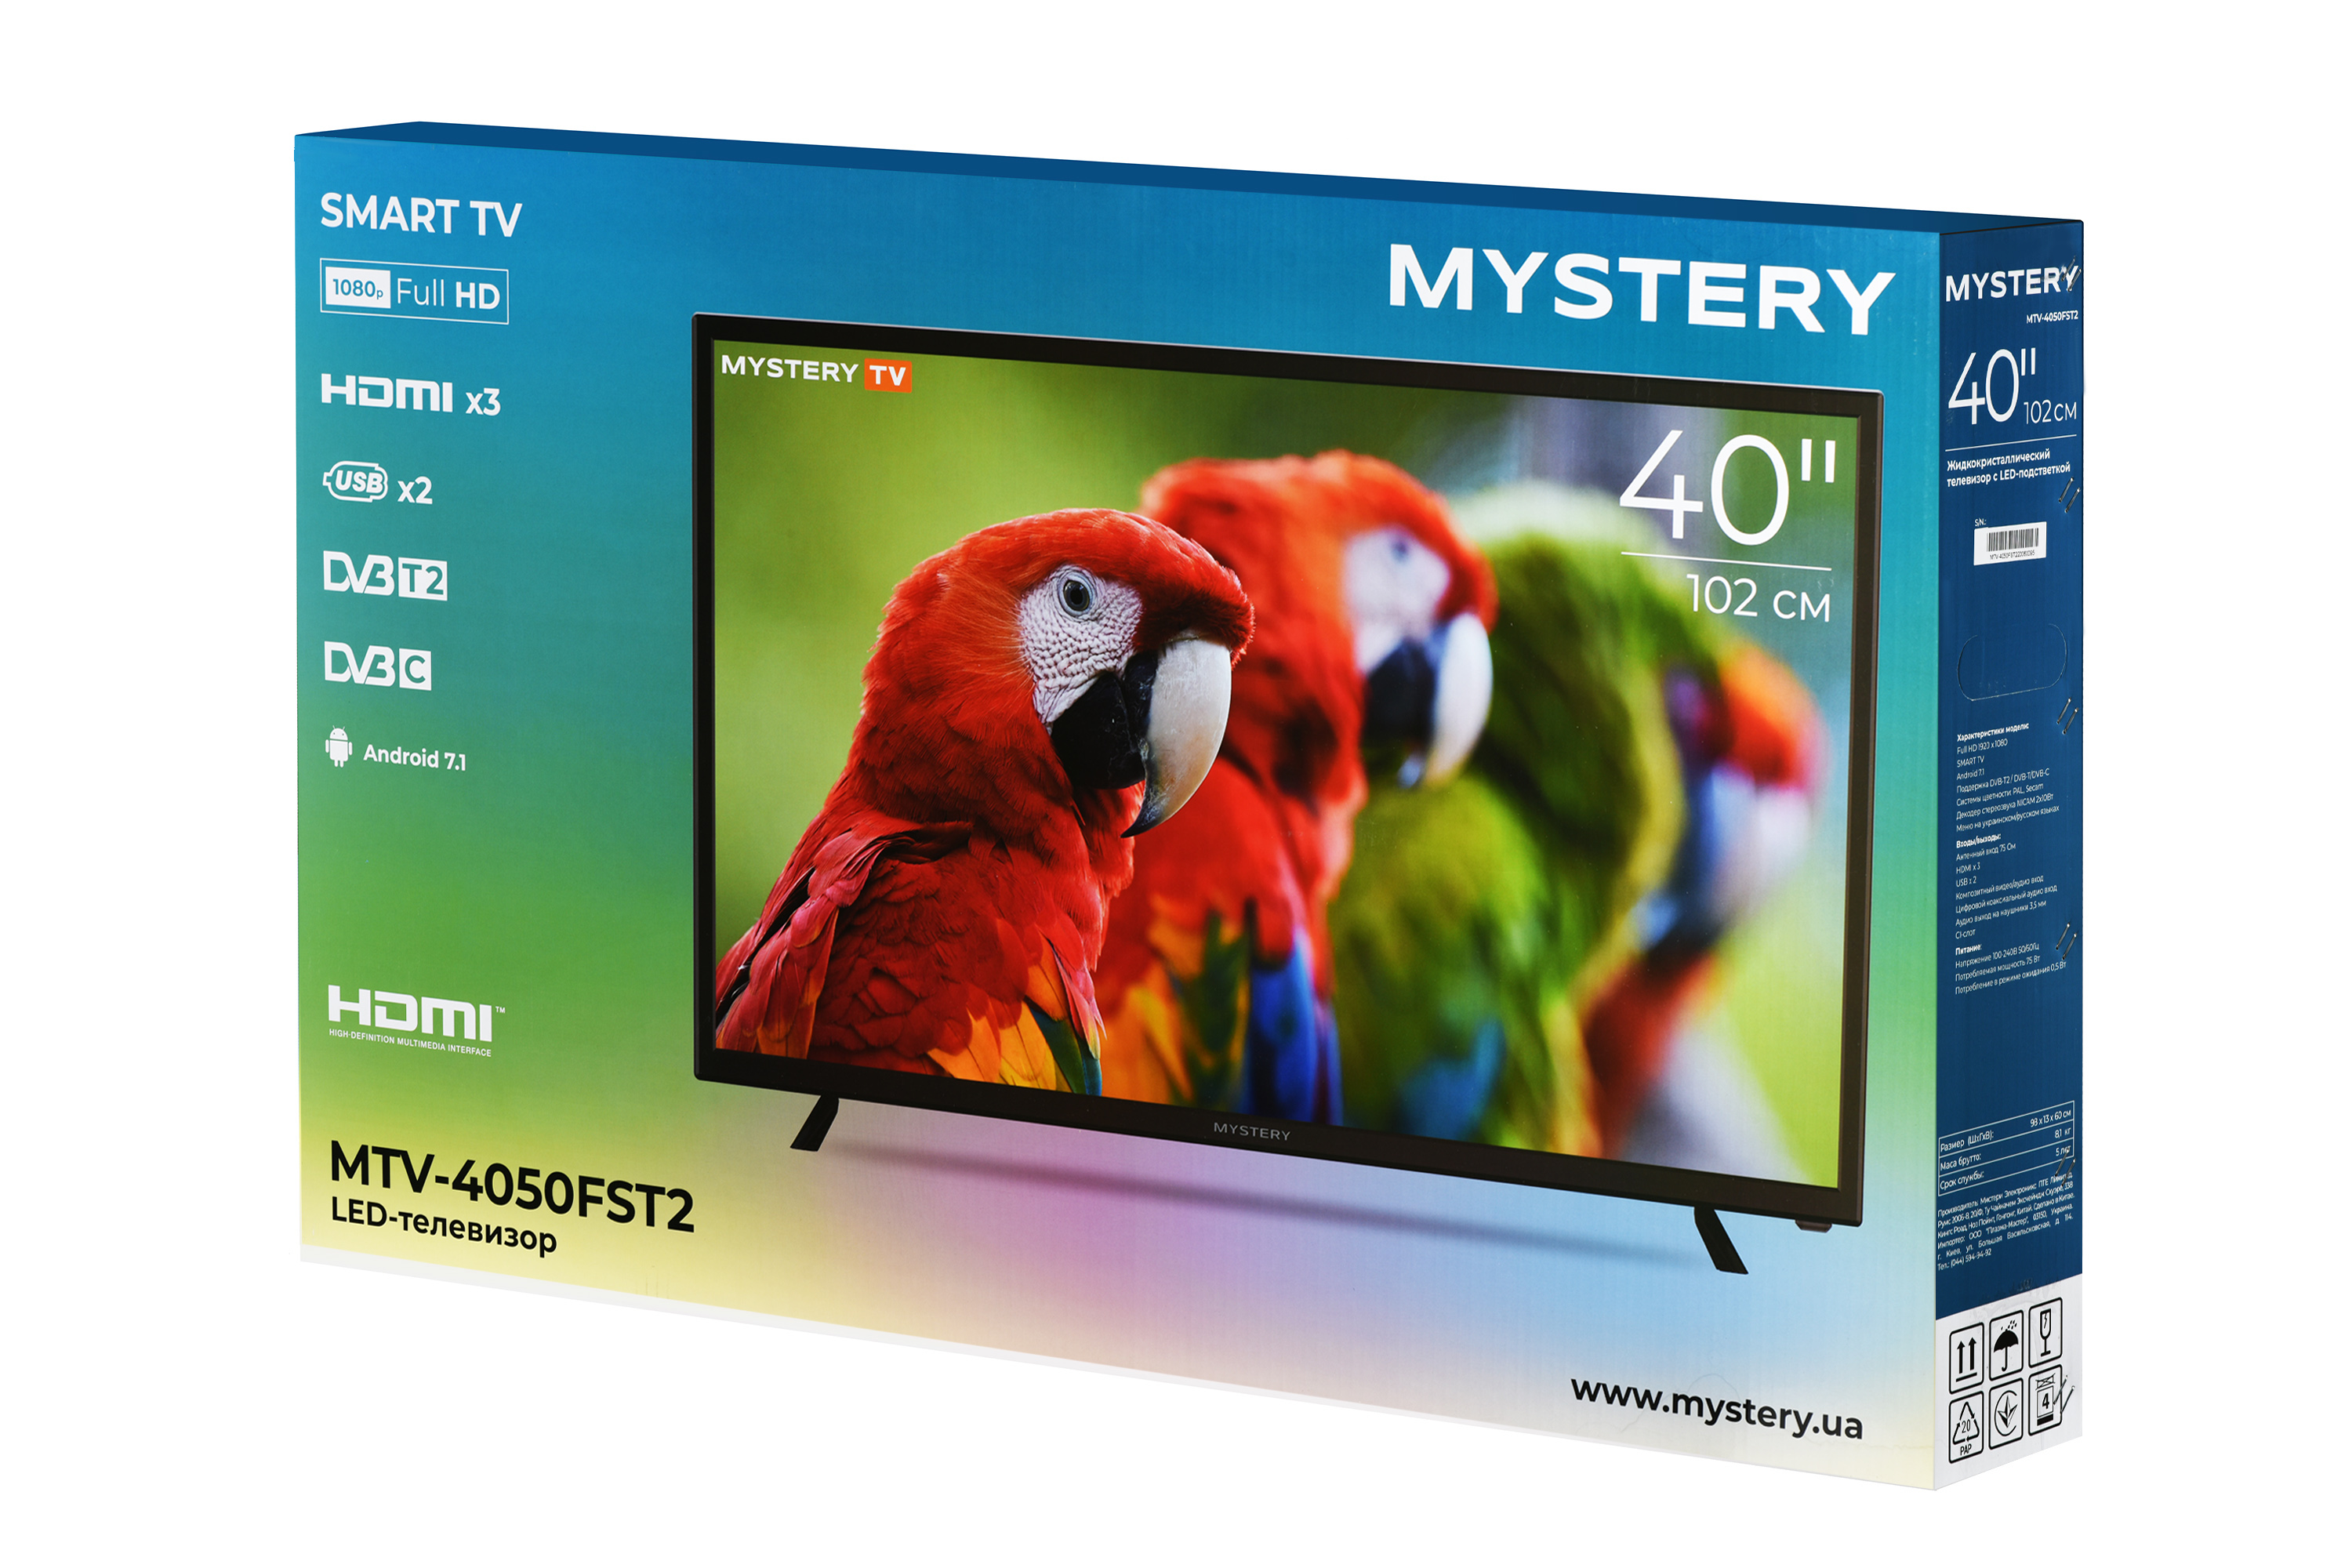 Mystery MTV-4050FST2 TV